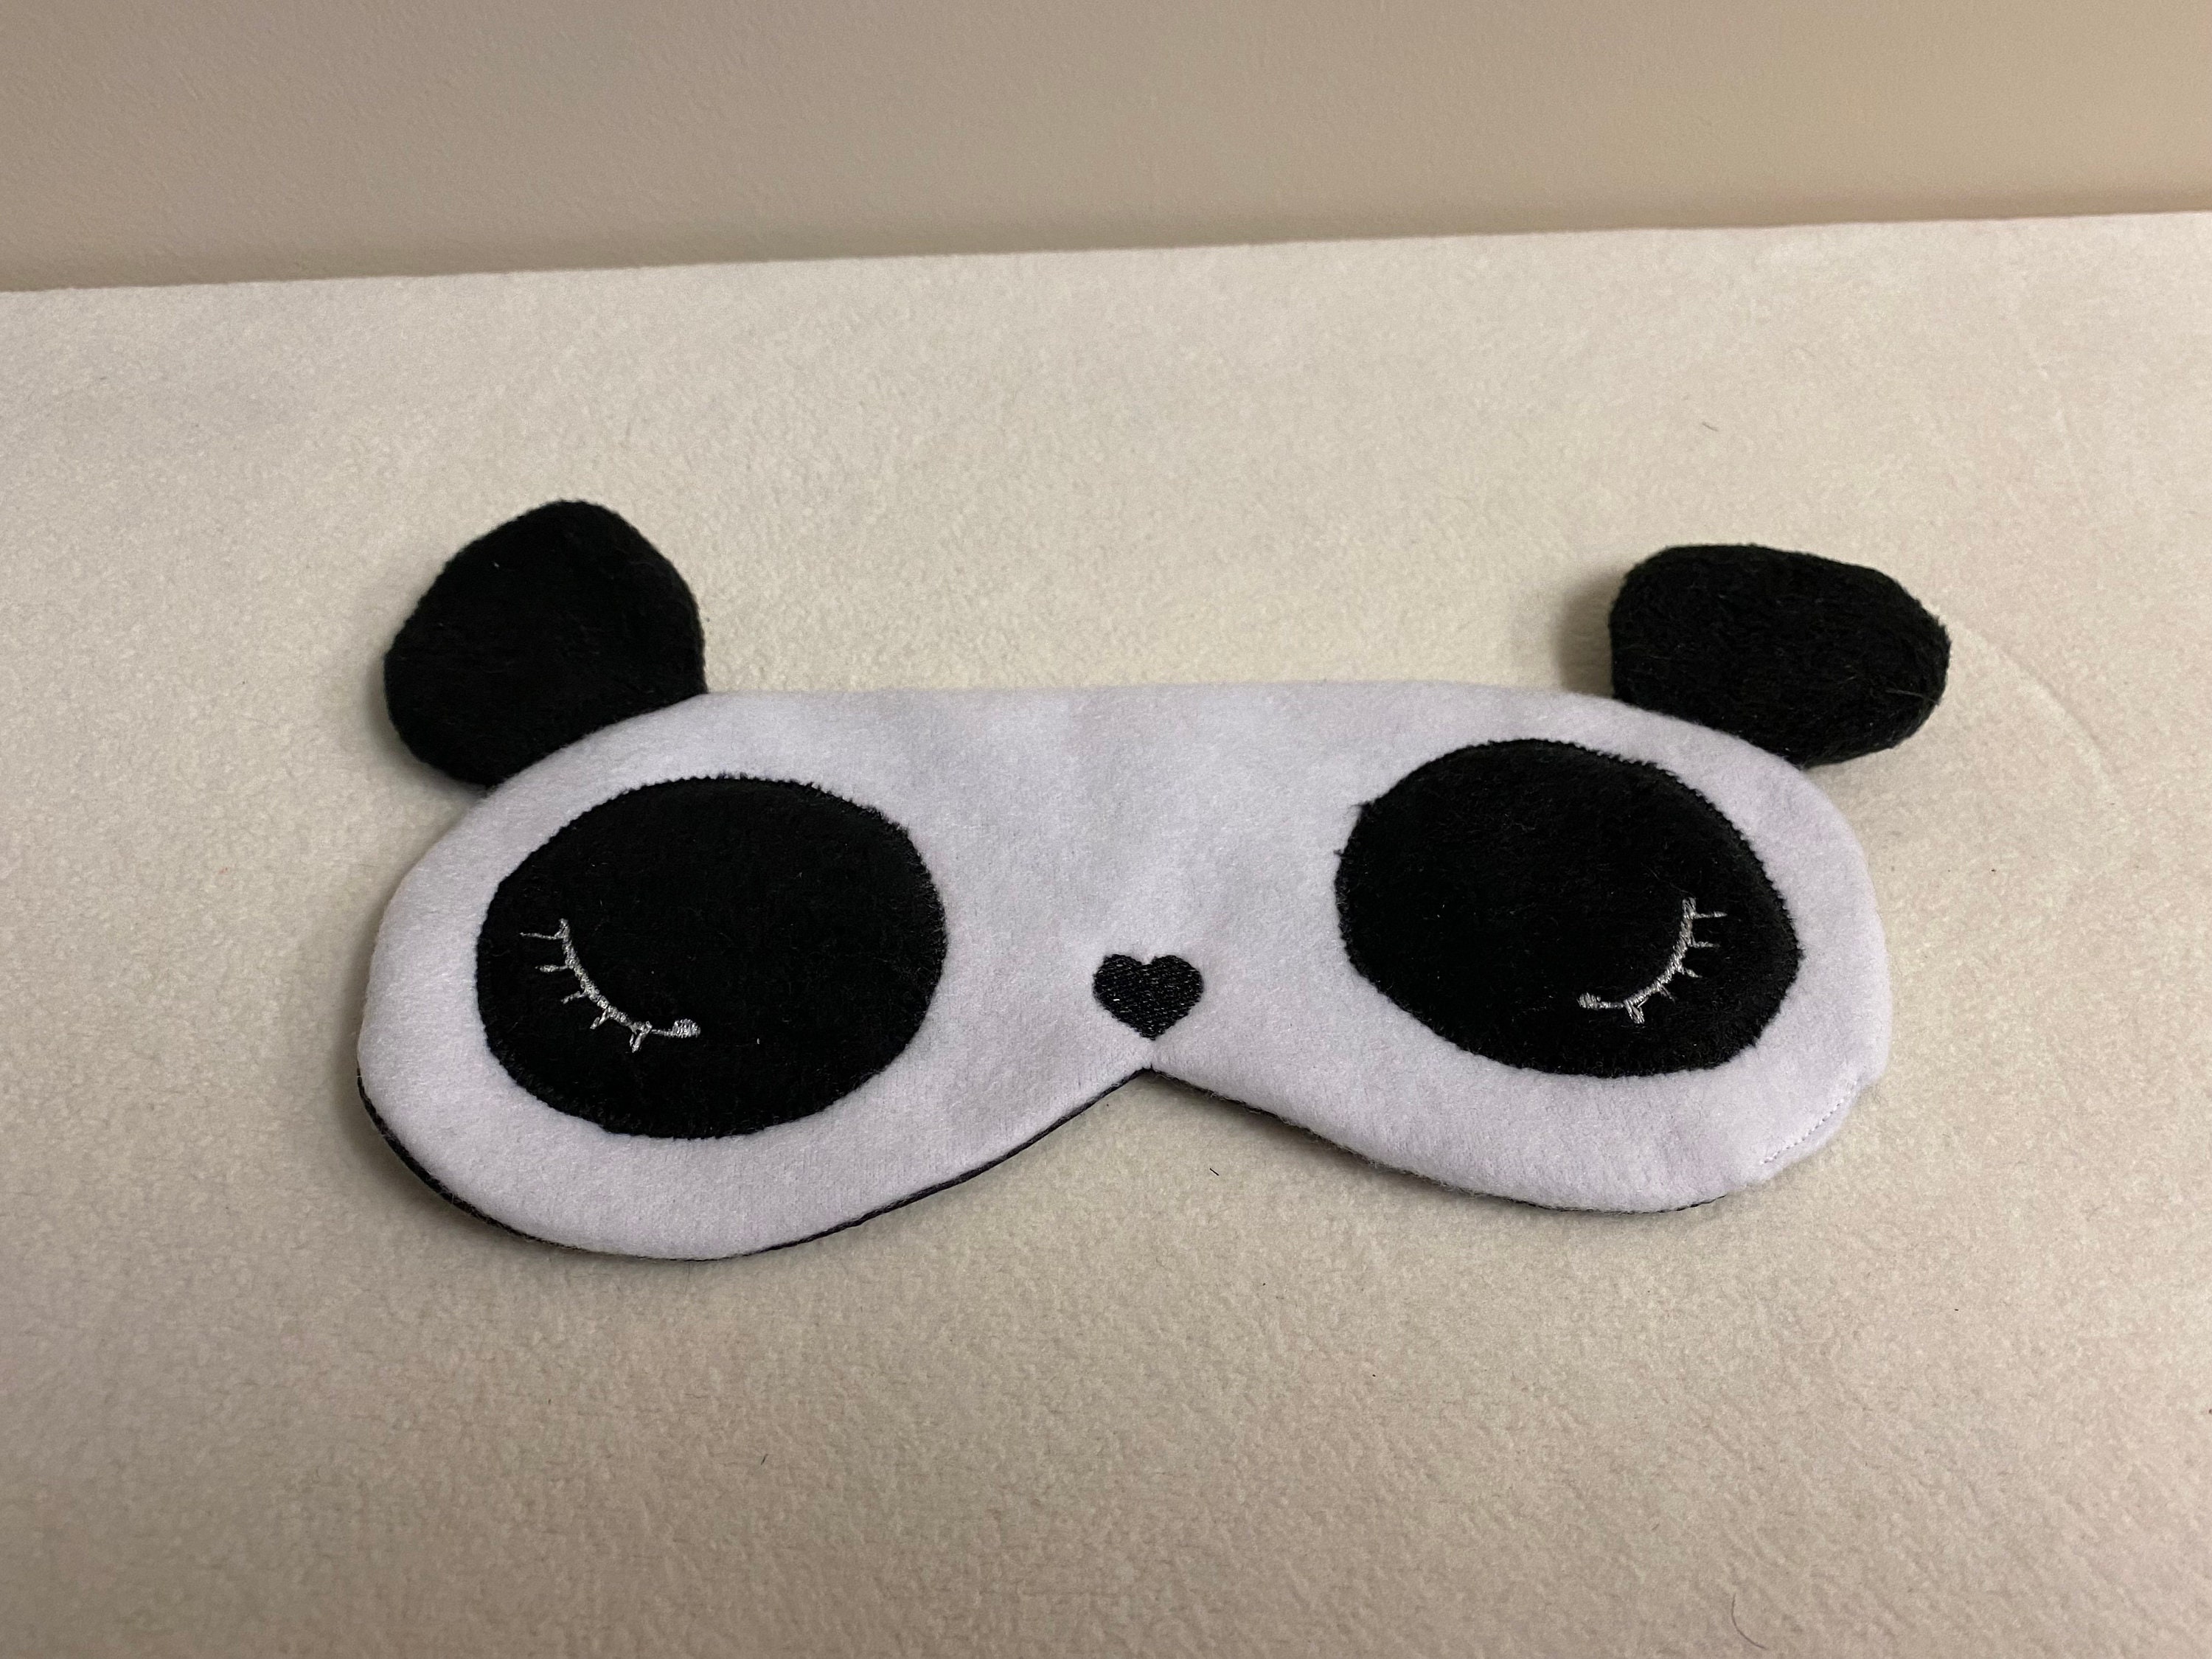 LEGAMI Travel Pillow with Sleep Mask Panda